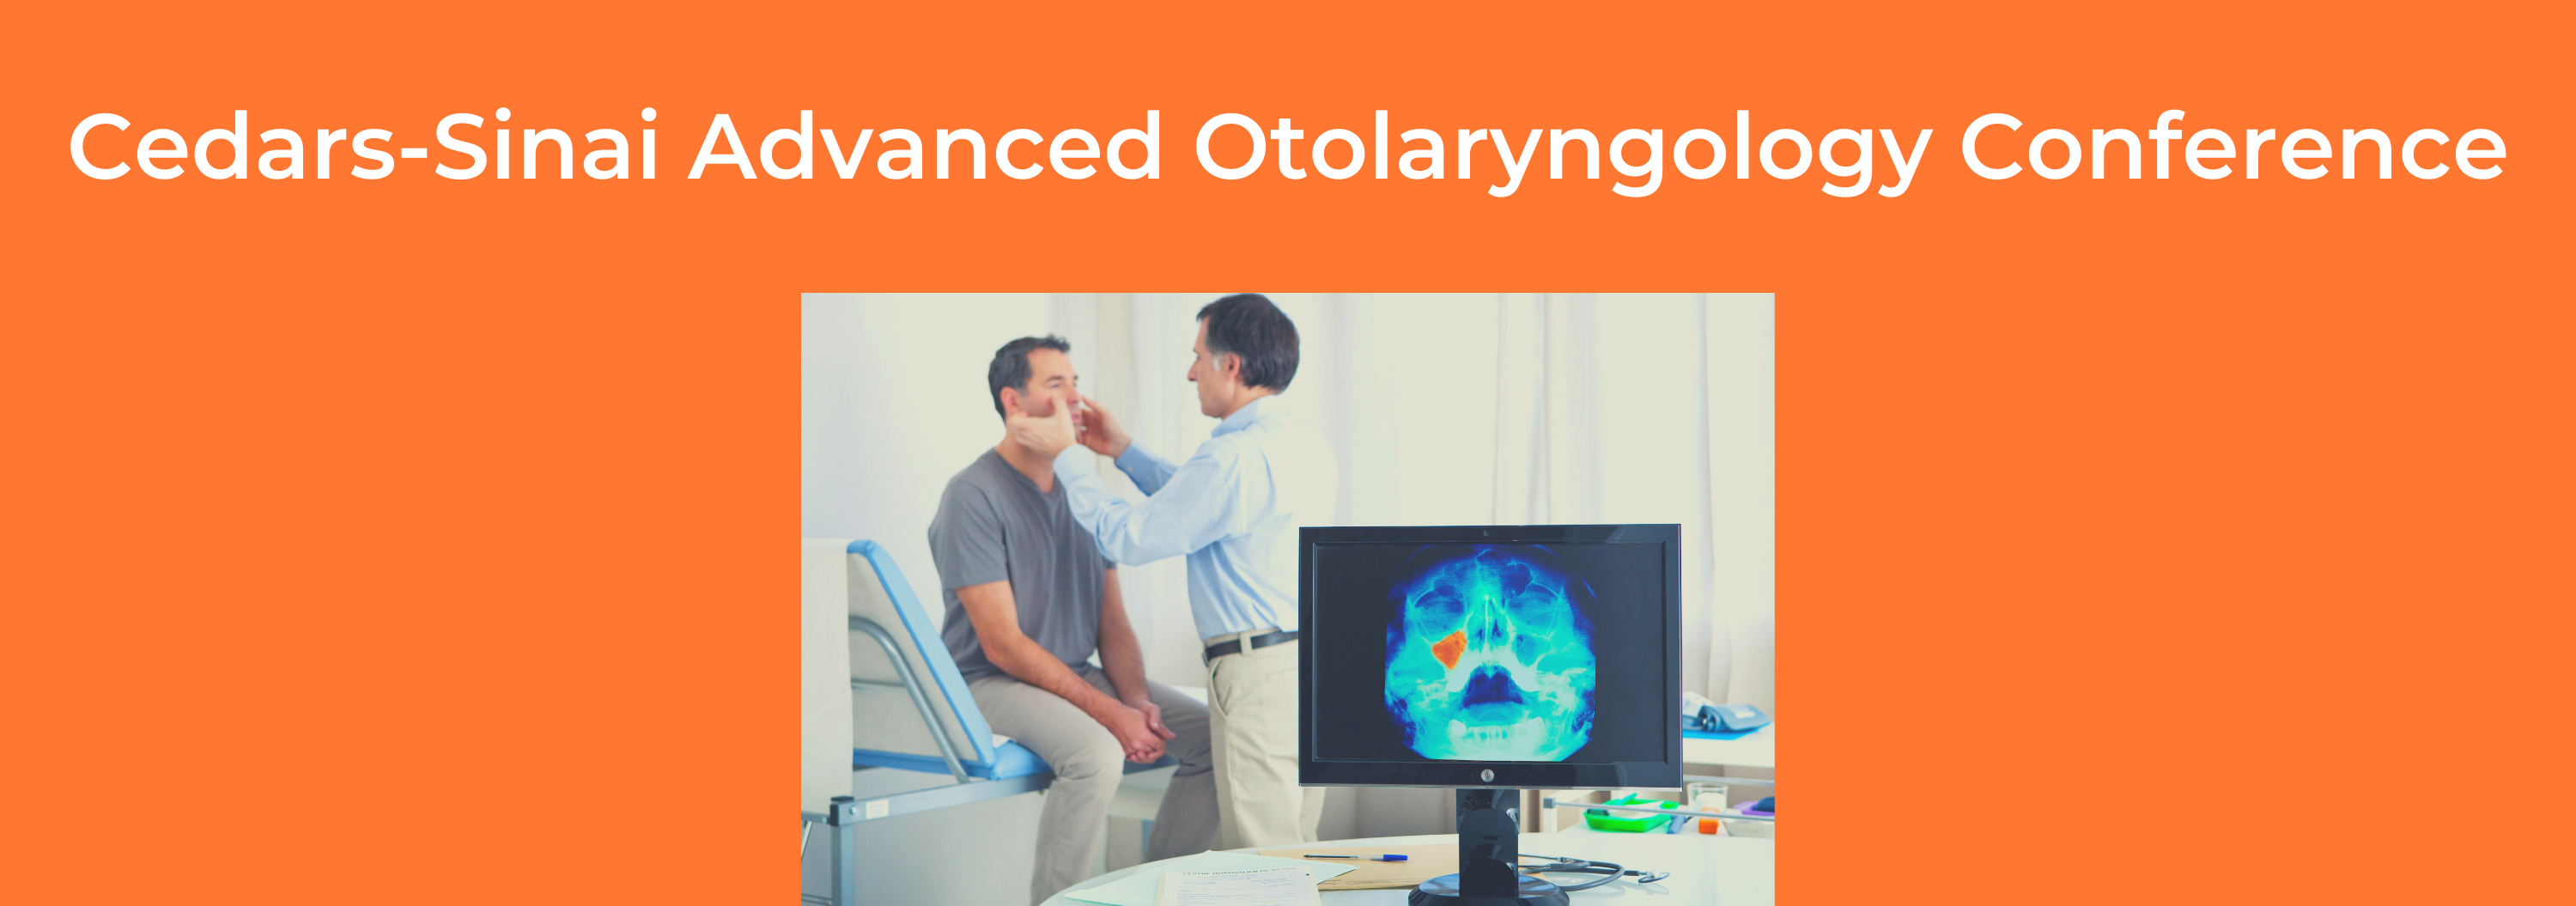 2020 Cedars-Sinai Advanced Otolaryngology Conference (Postponed) Banner